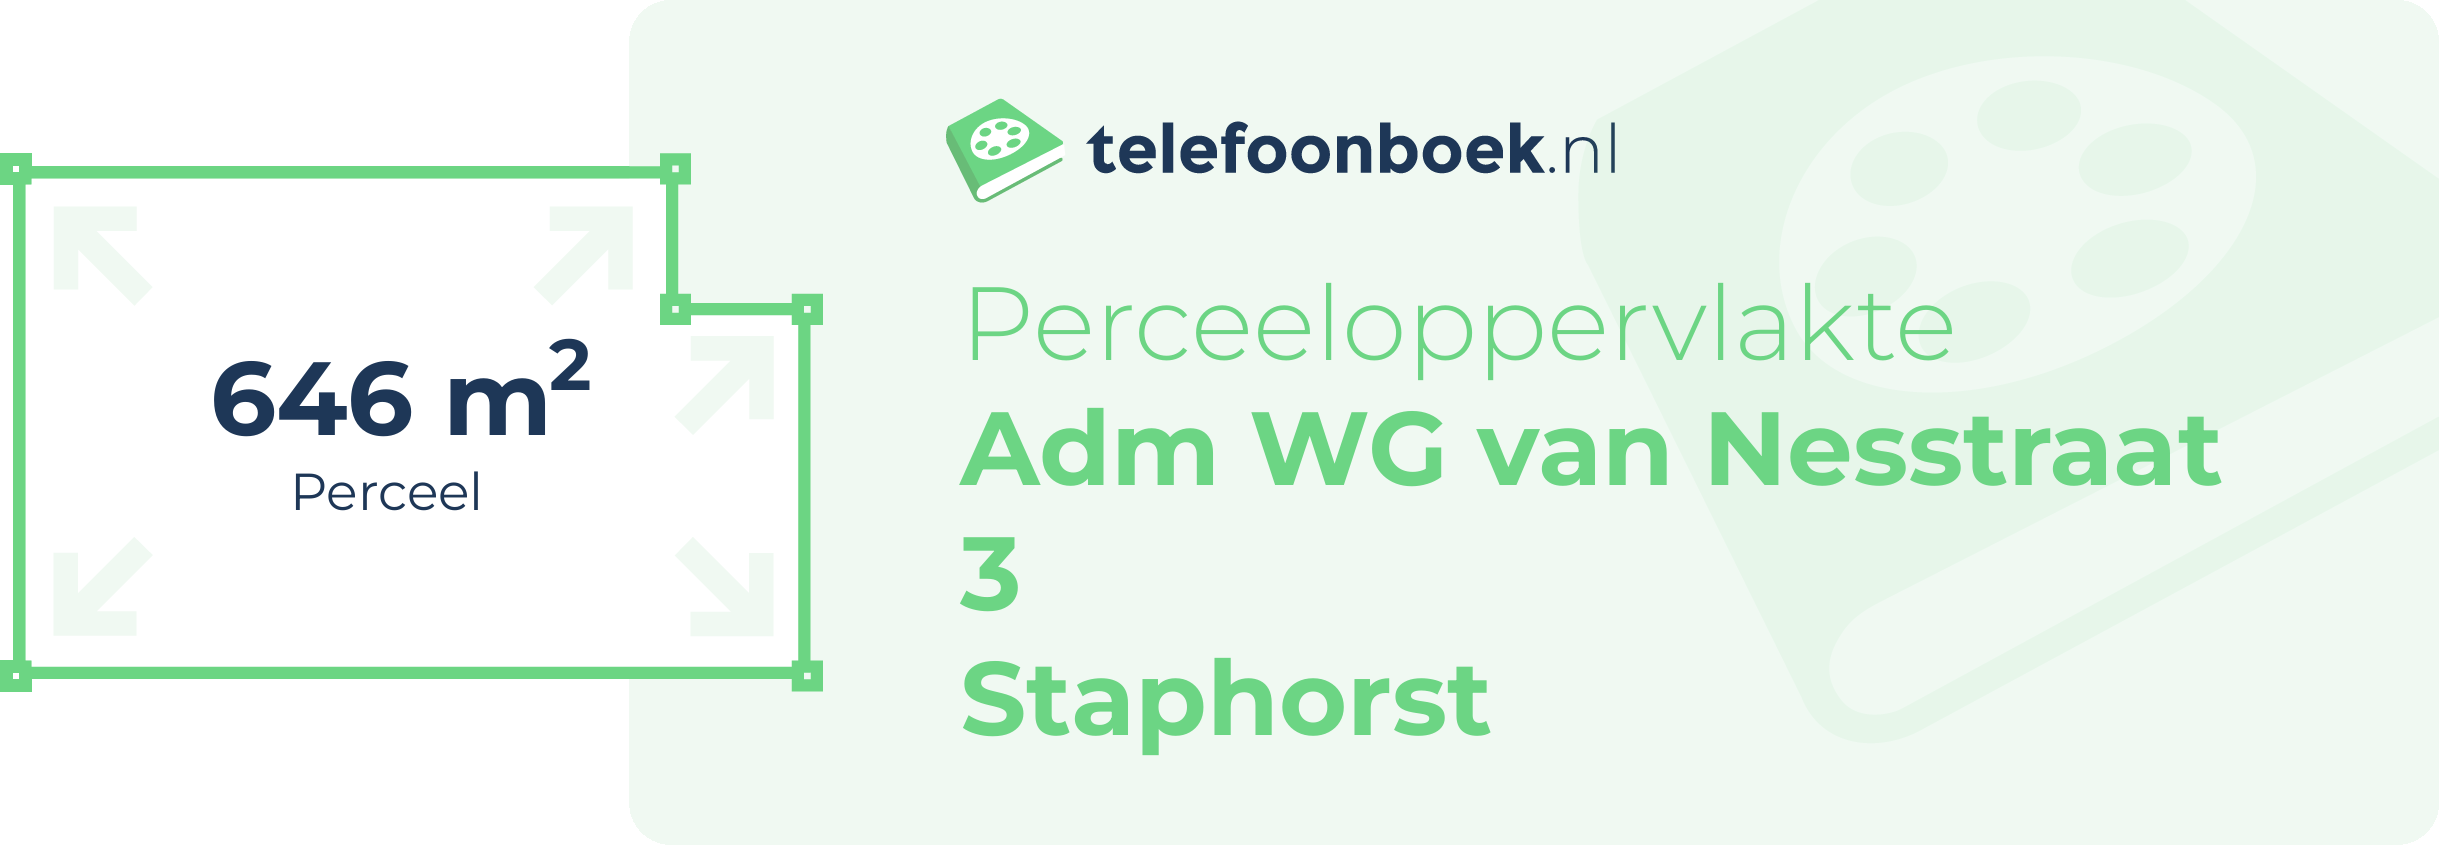 Perceeloppervlakte Adm WG Van Nesstraat 3 Staphorst